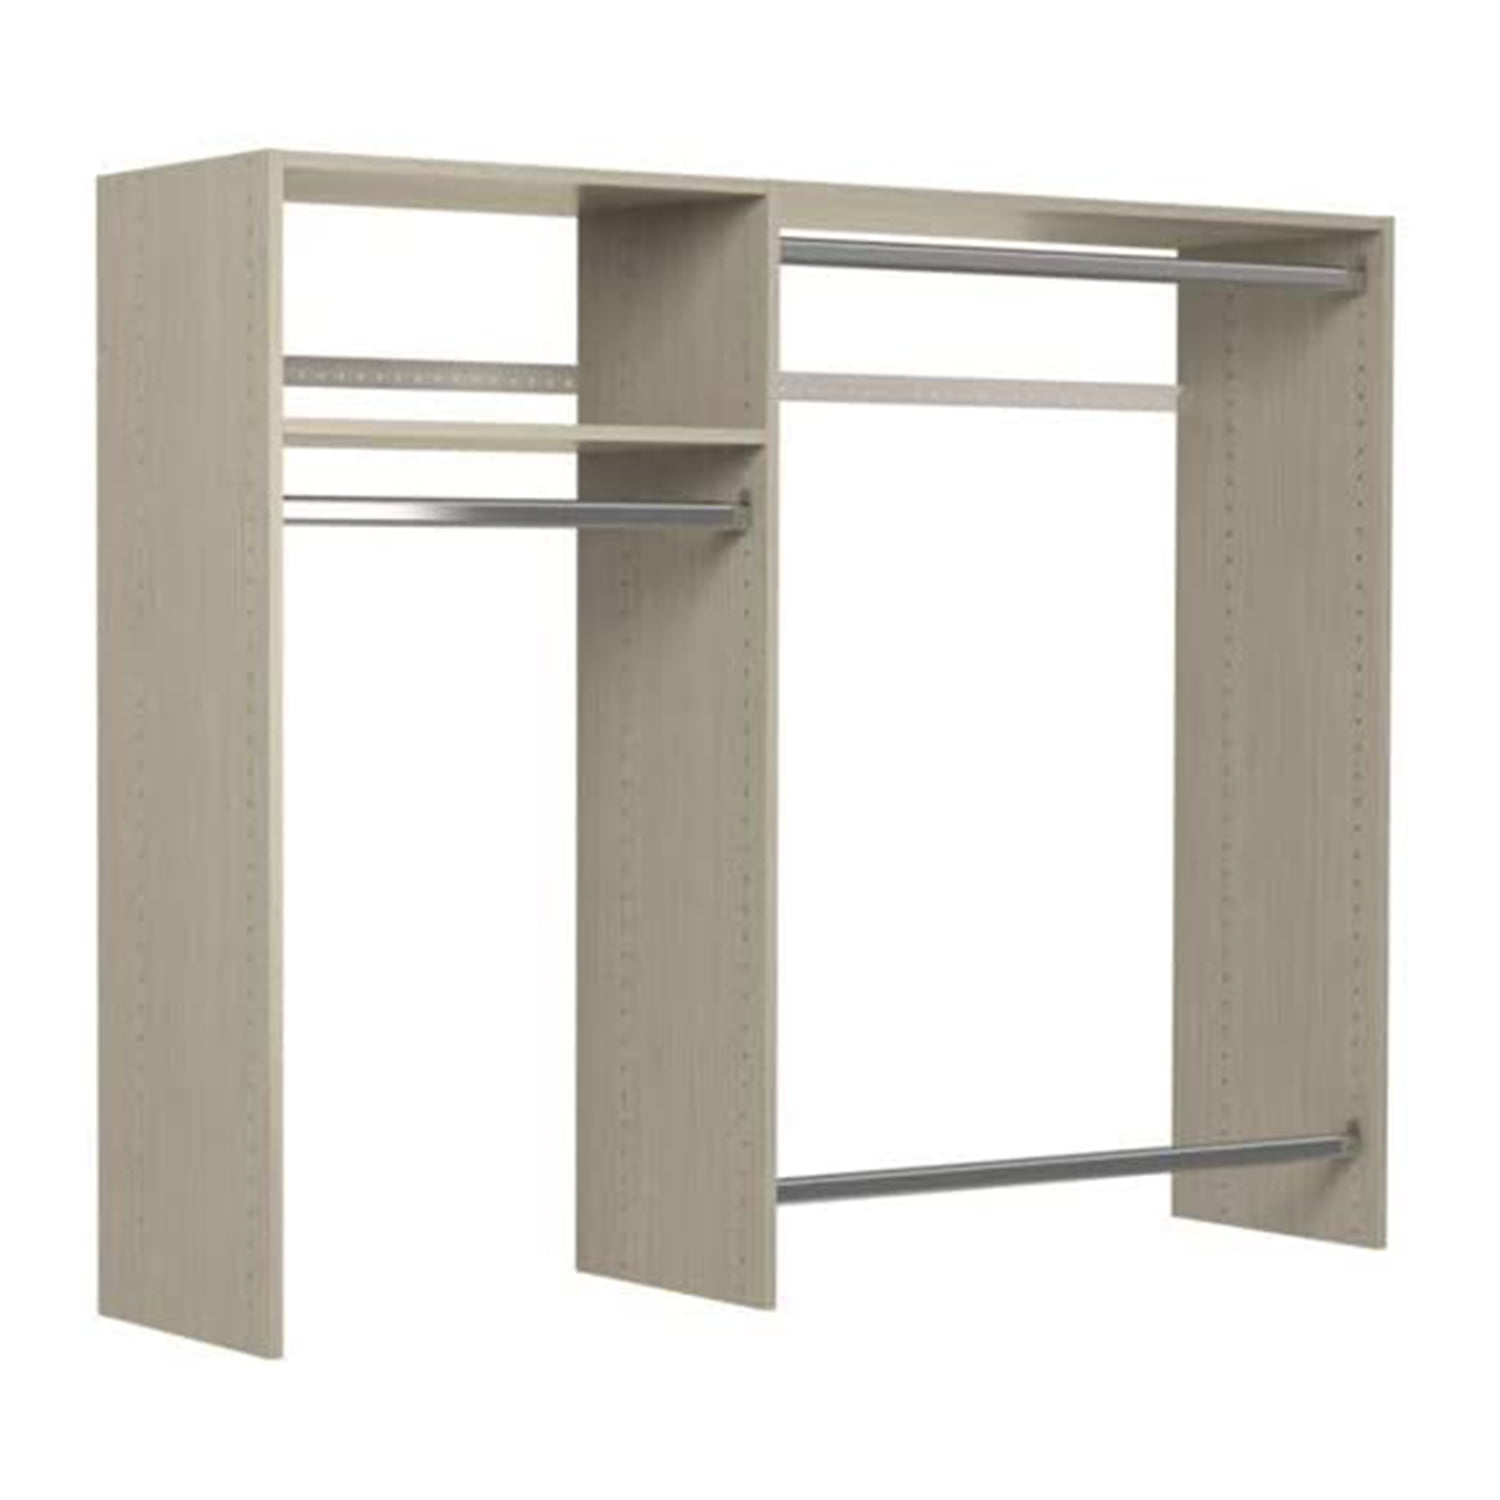 Evelots Wood Shelf Divider/Separator-Closet/Office-New Extra Steel Bracket-Set/4